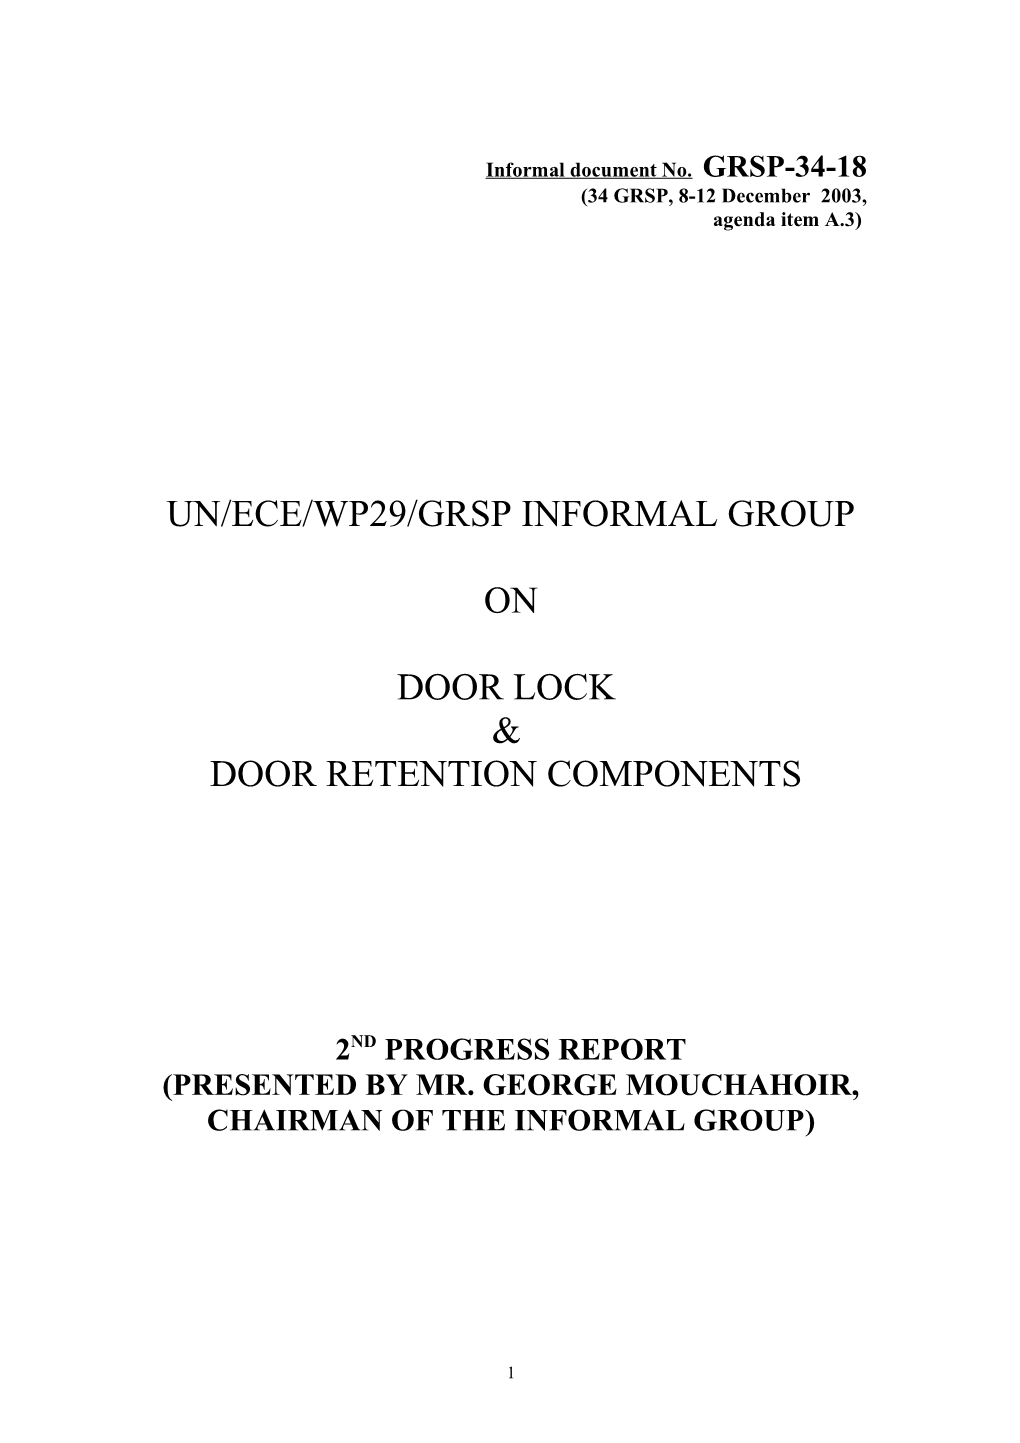 Informal Document No. GRSP-34-18